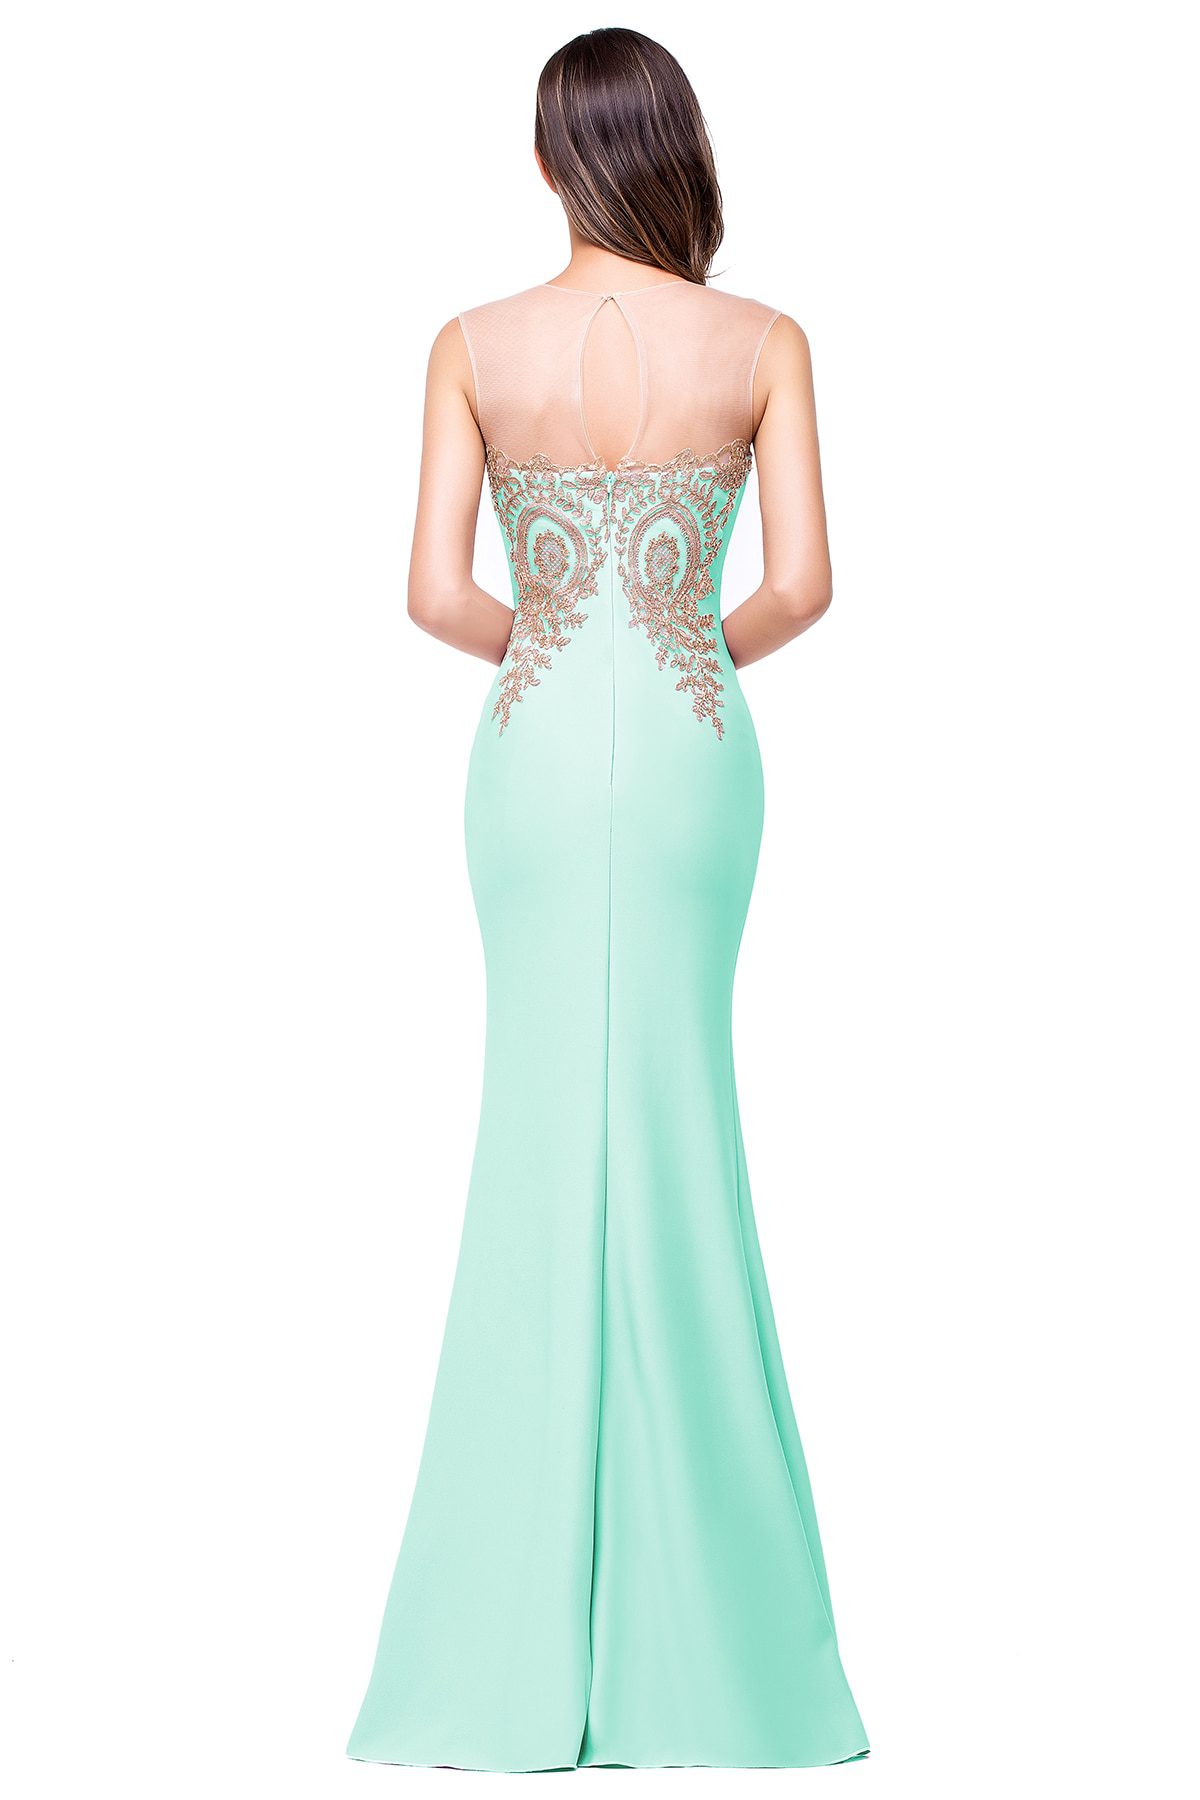 BABYONLINE Mint Green Bridesmaid Dresses Maxi Floor Length Mermaid Gowns Elegant Golden Appqulies Sweetheart Illusion Summer